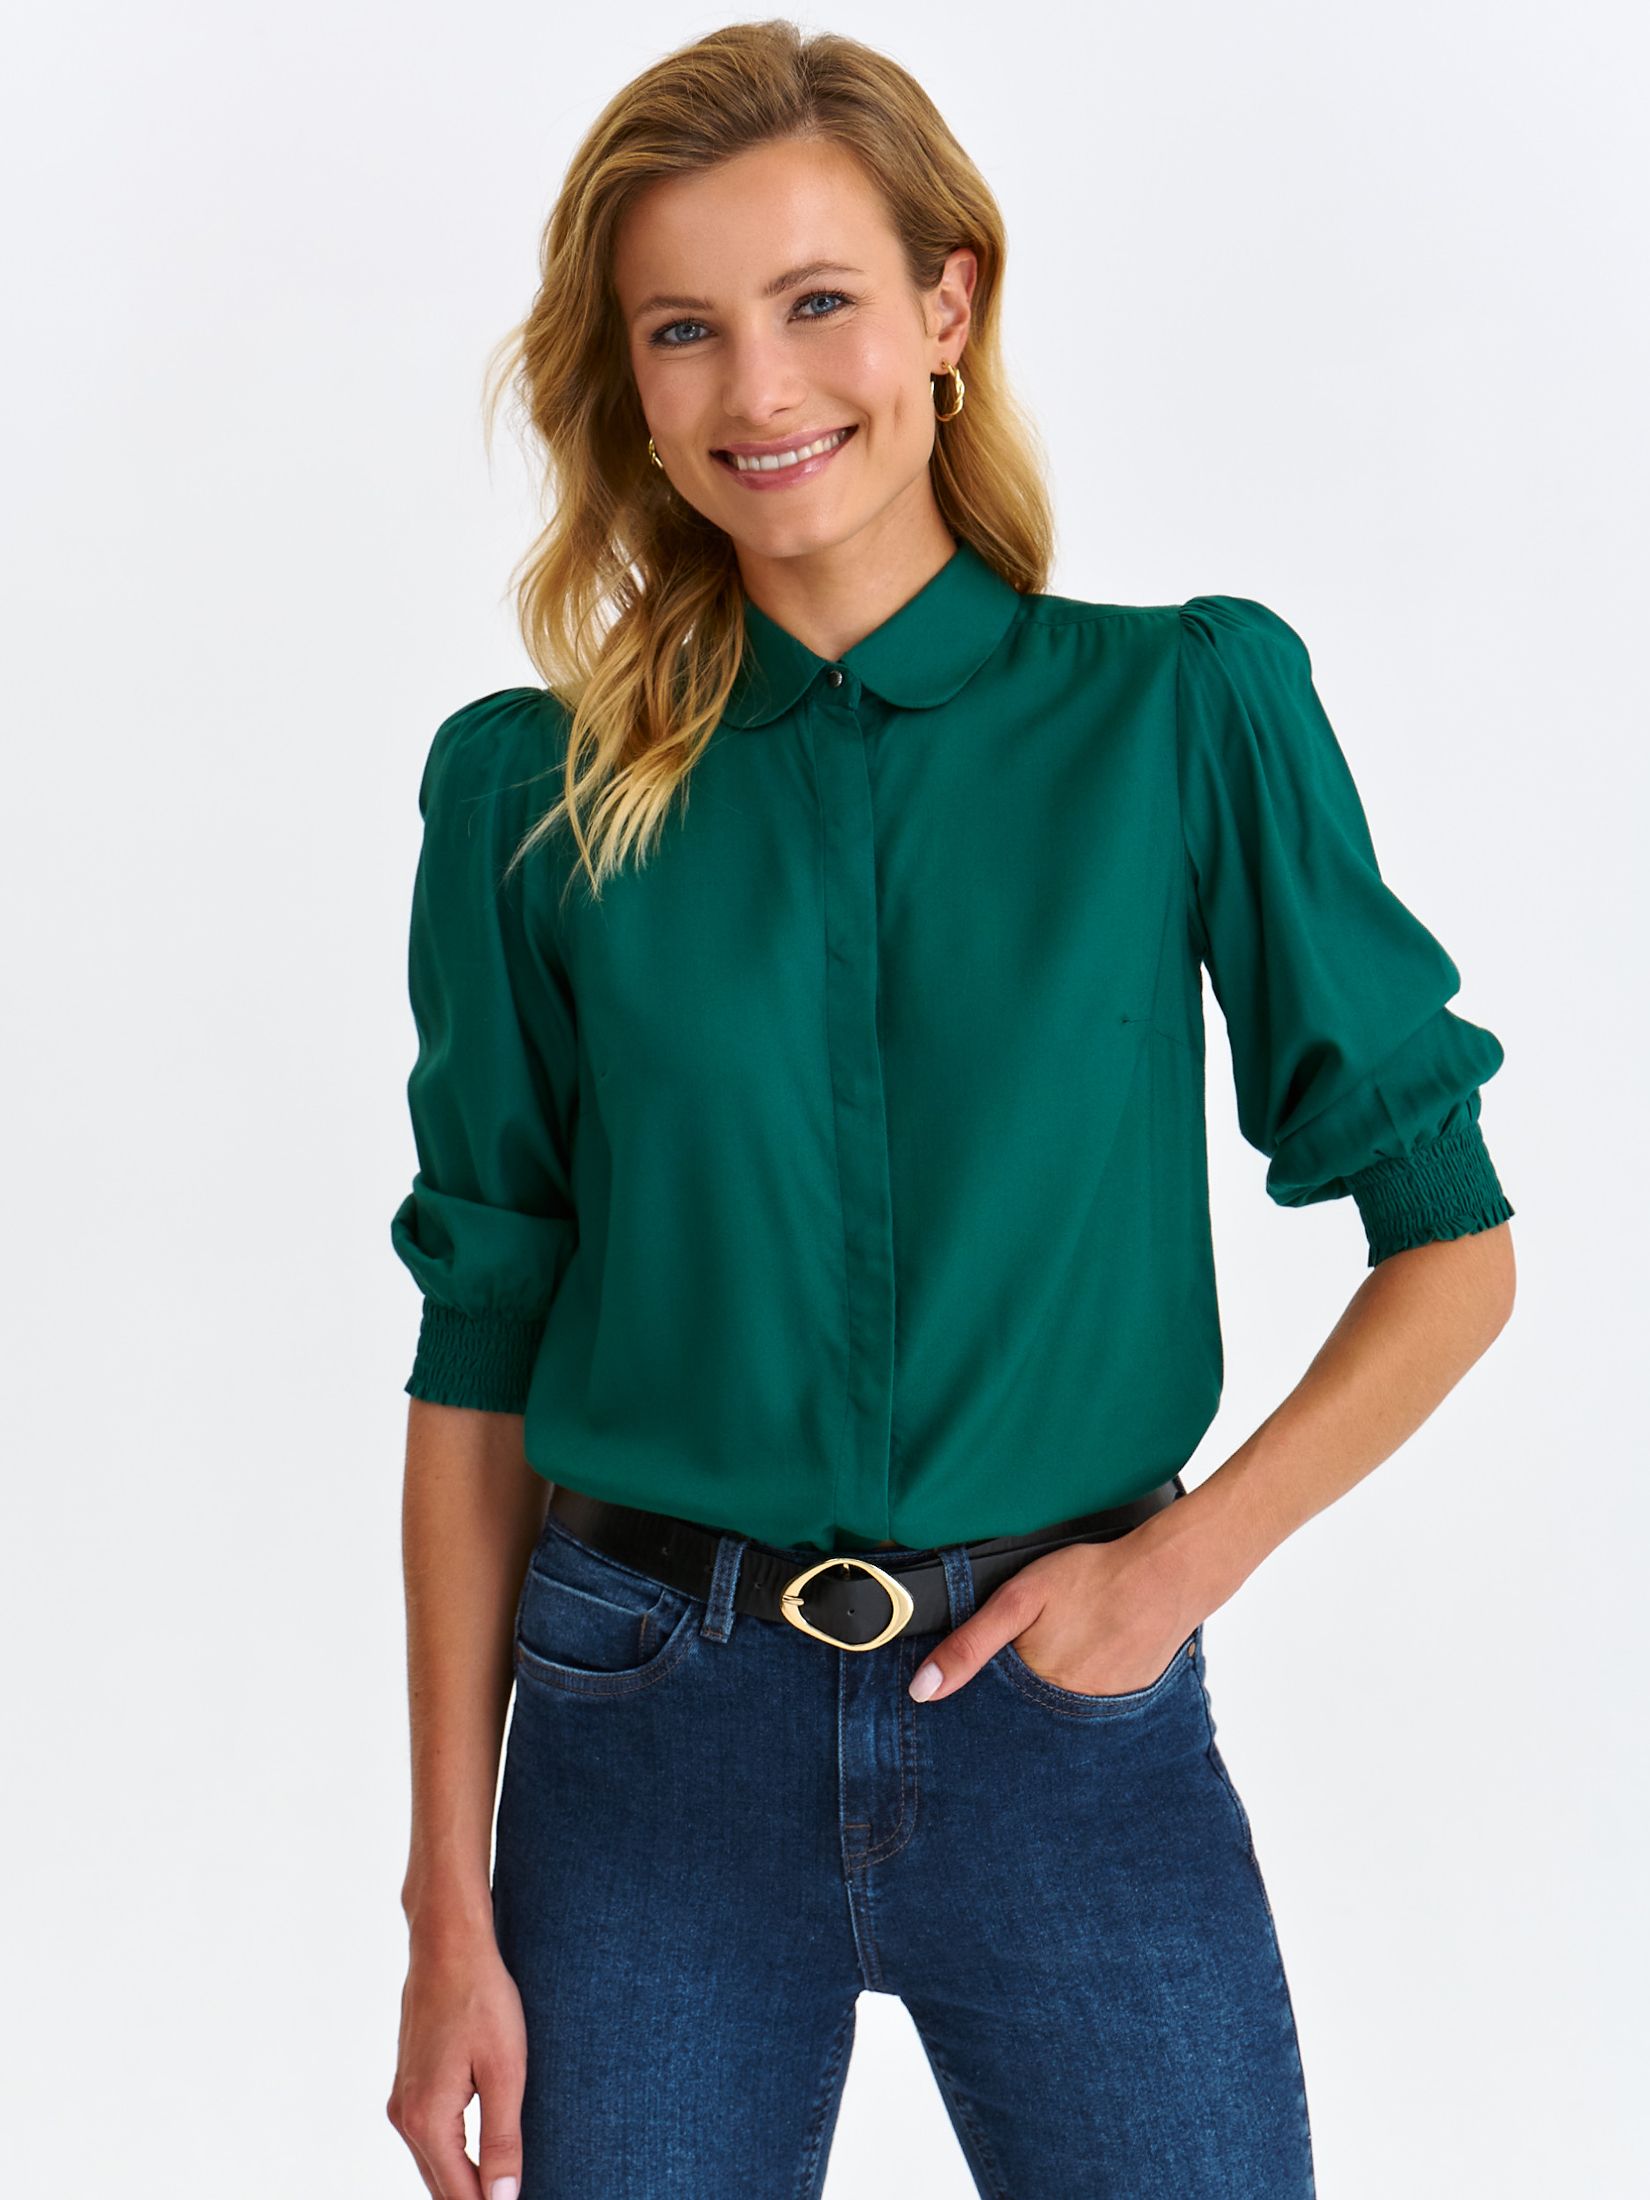 Green women`s shirt thin fabric loose fit high shoulders